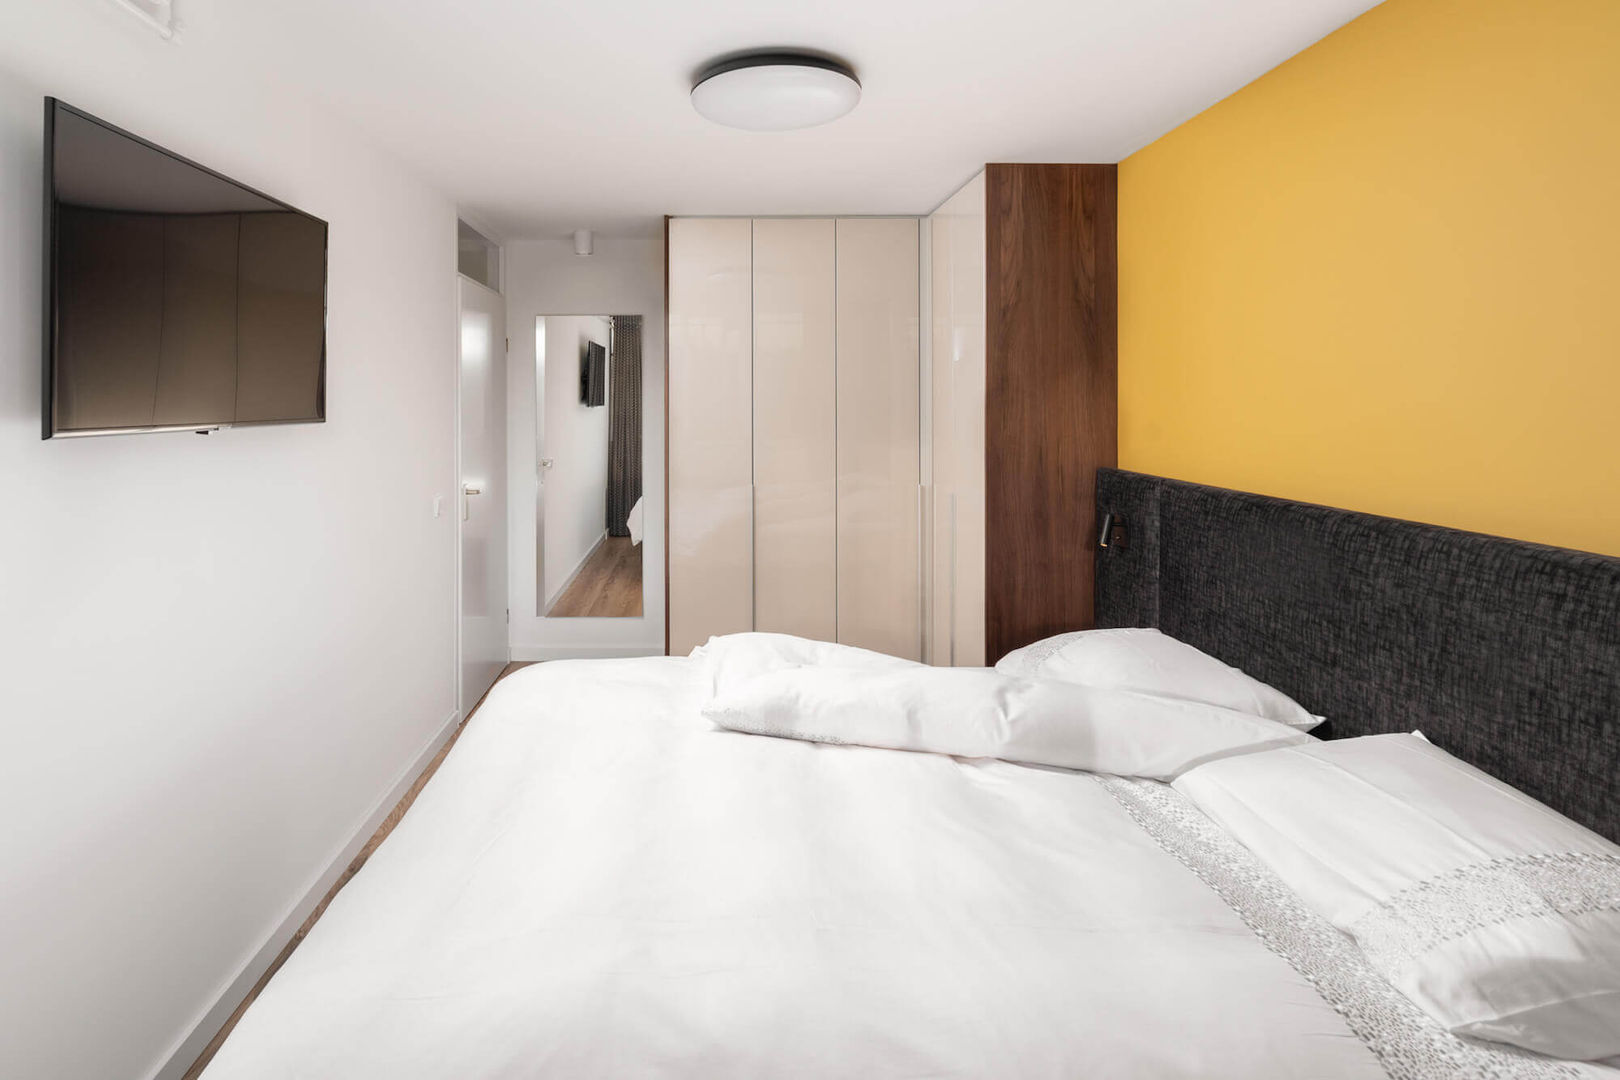 Slaapkamer met hoekkast De Suite Moderne slaapkamers hoekkast, kast slaapkamer,Garderobe- & ladekasten